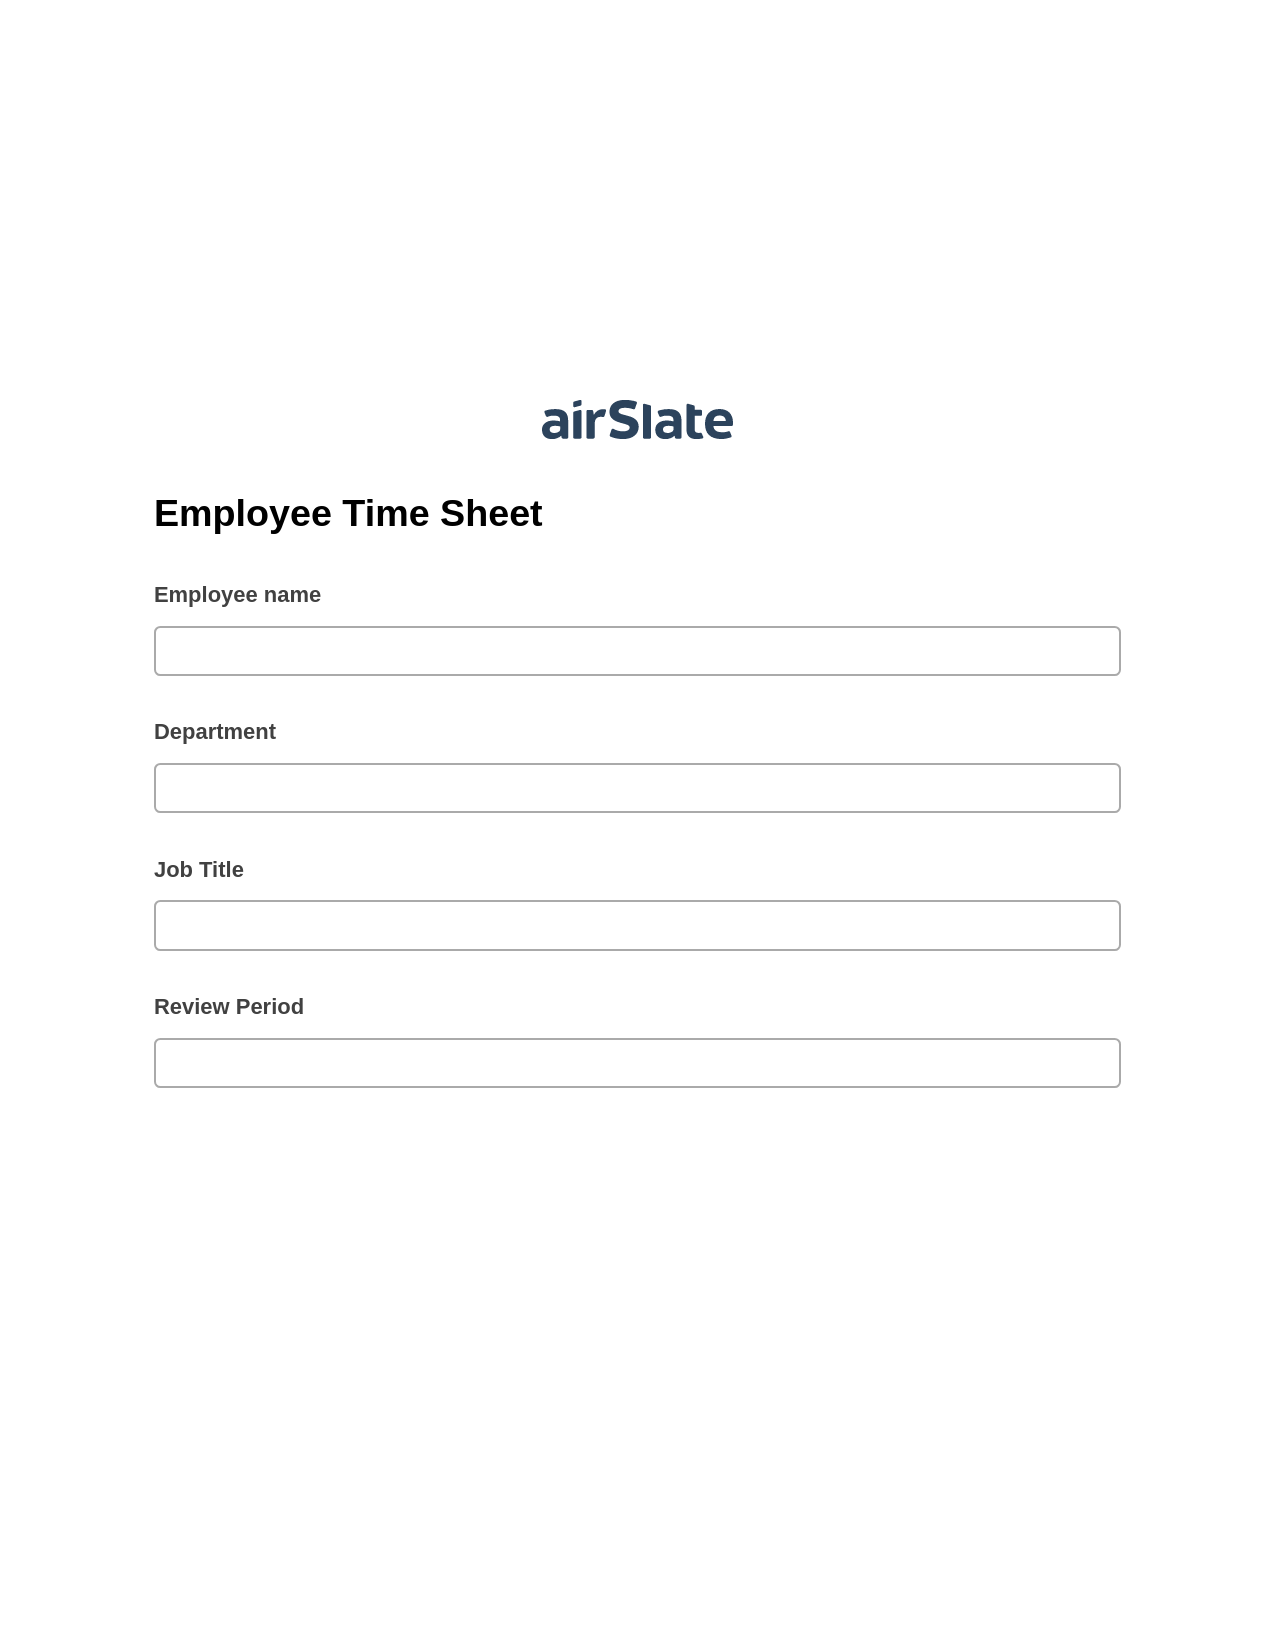 Employee Time Sheet Pre-fill Document Bot, Remove Slate Bot, Export to MySQL Bot